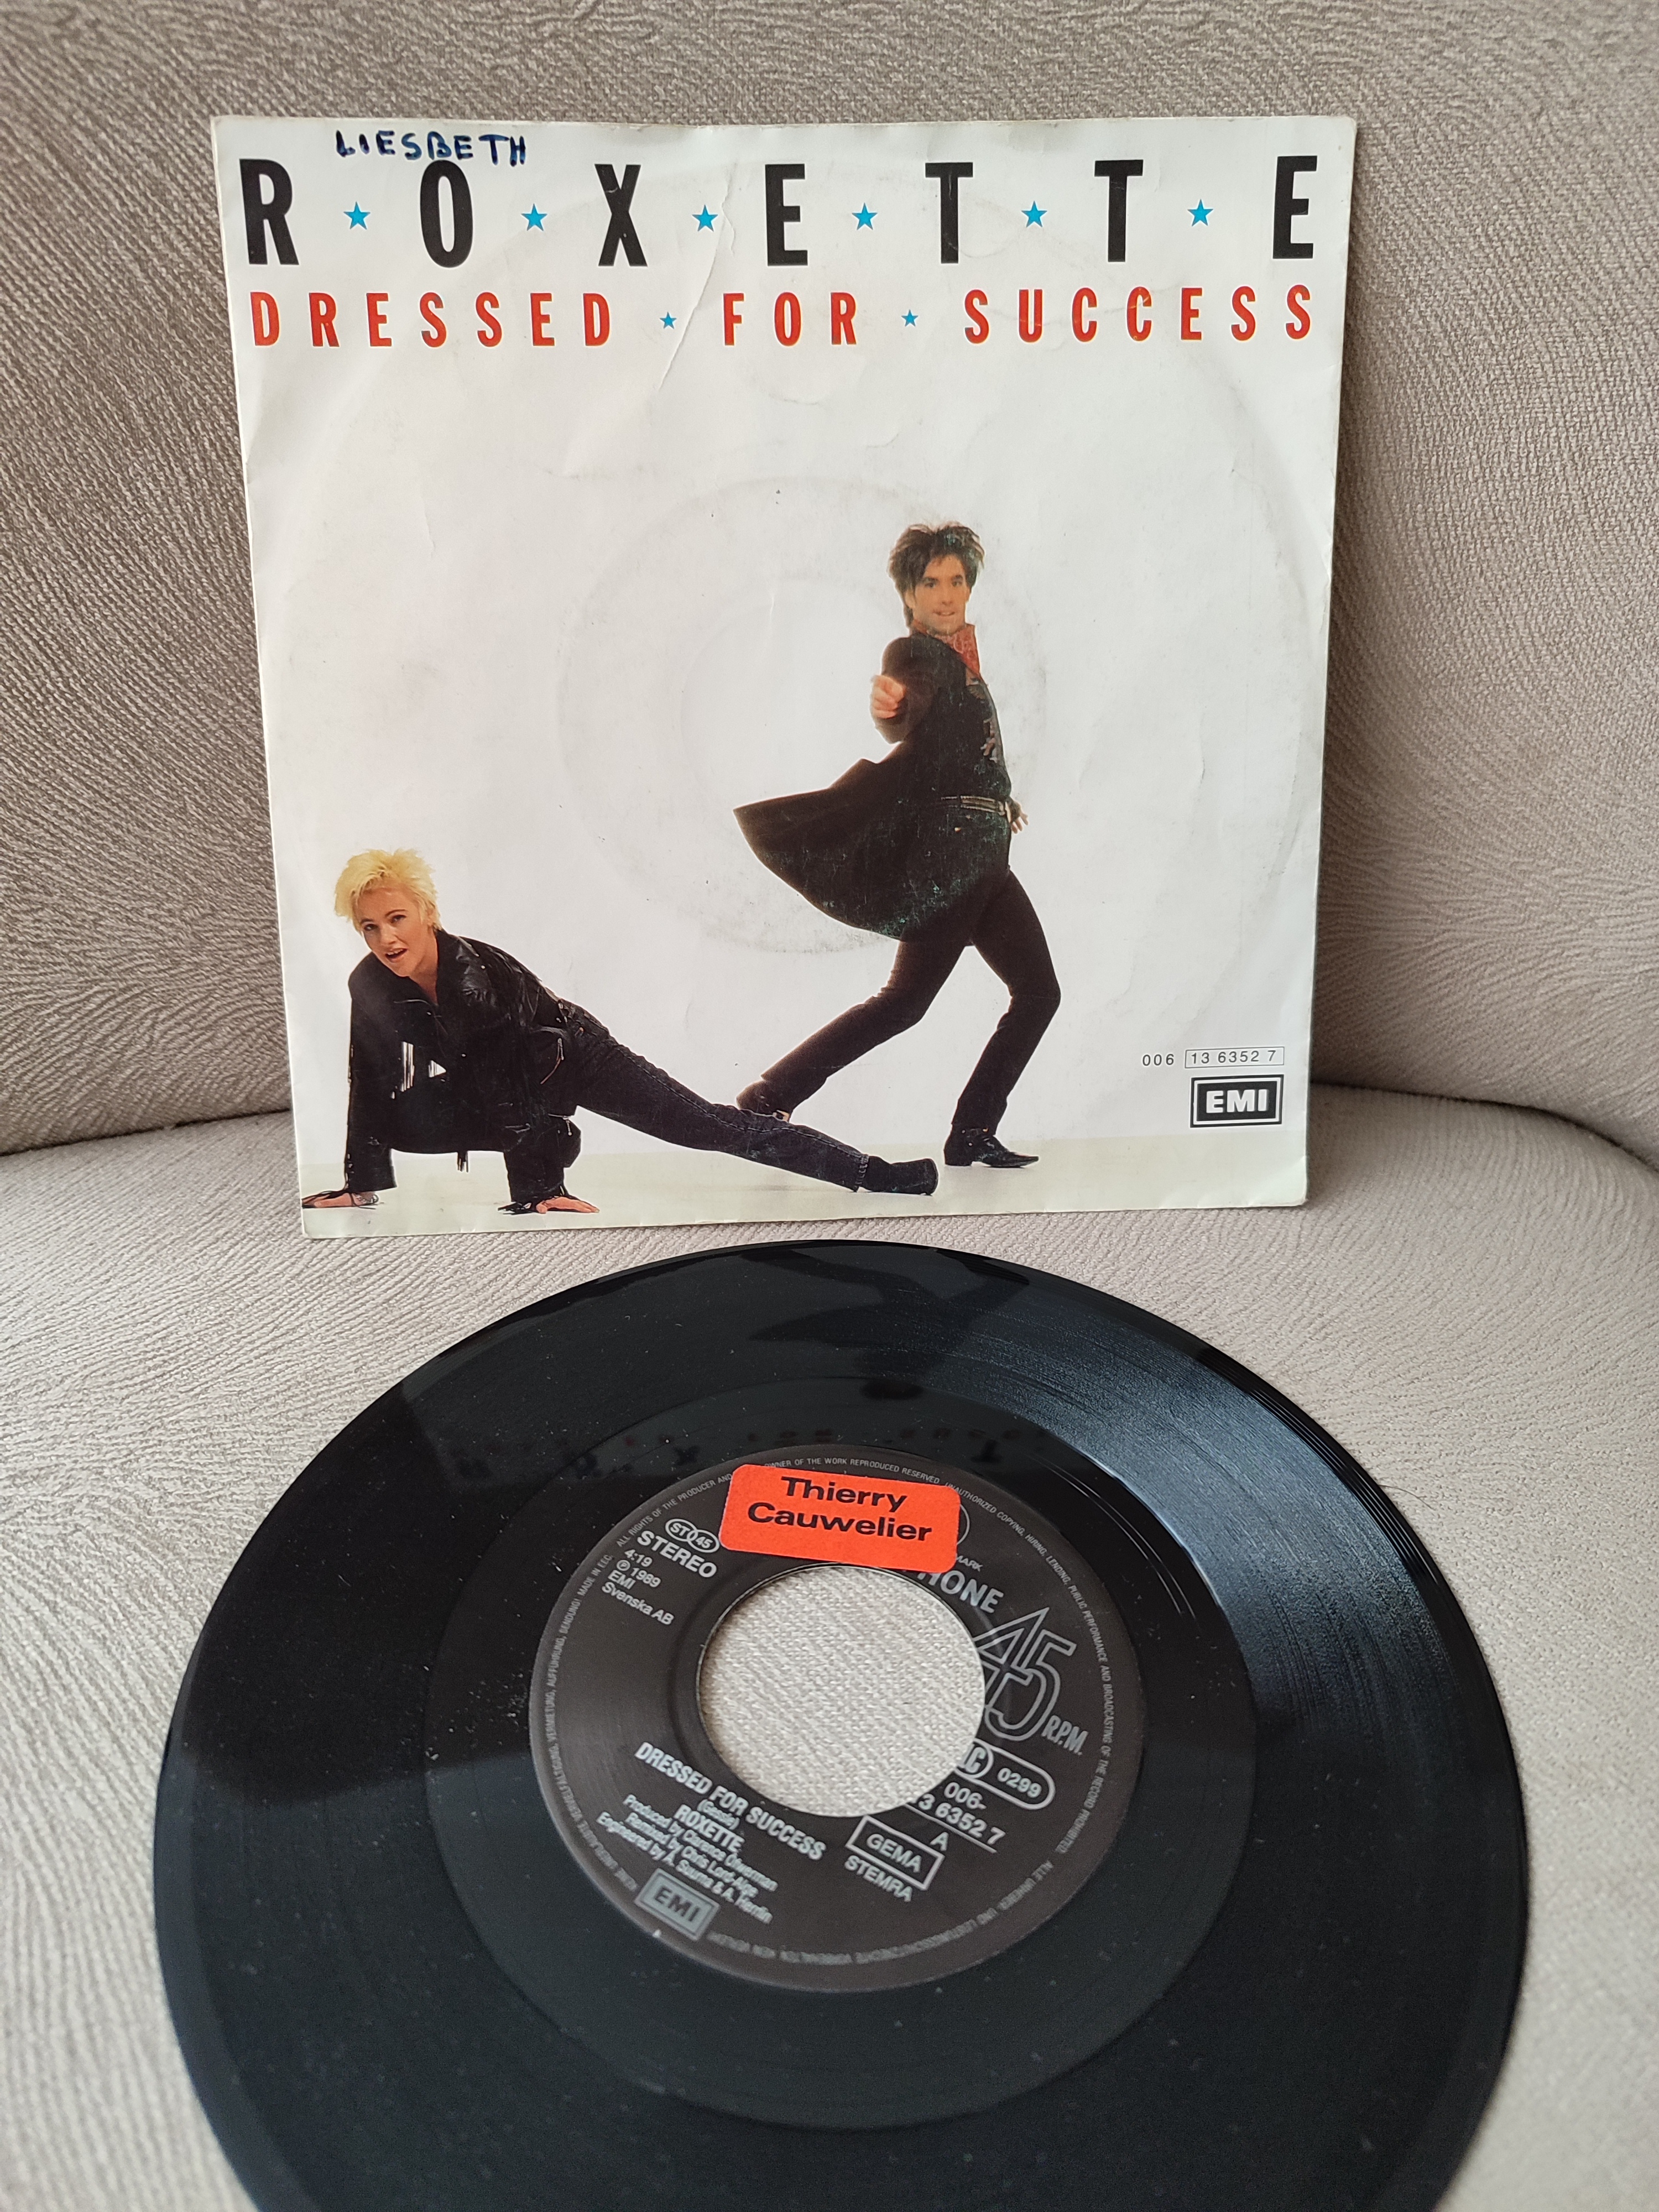 ROXETTE - DRESSED FOR SUCCESS / THE VOICE - 1989 HOLLANDA BASIM 45 LİK PLAK 2. EL